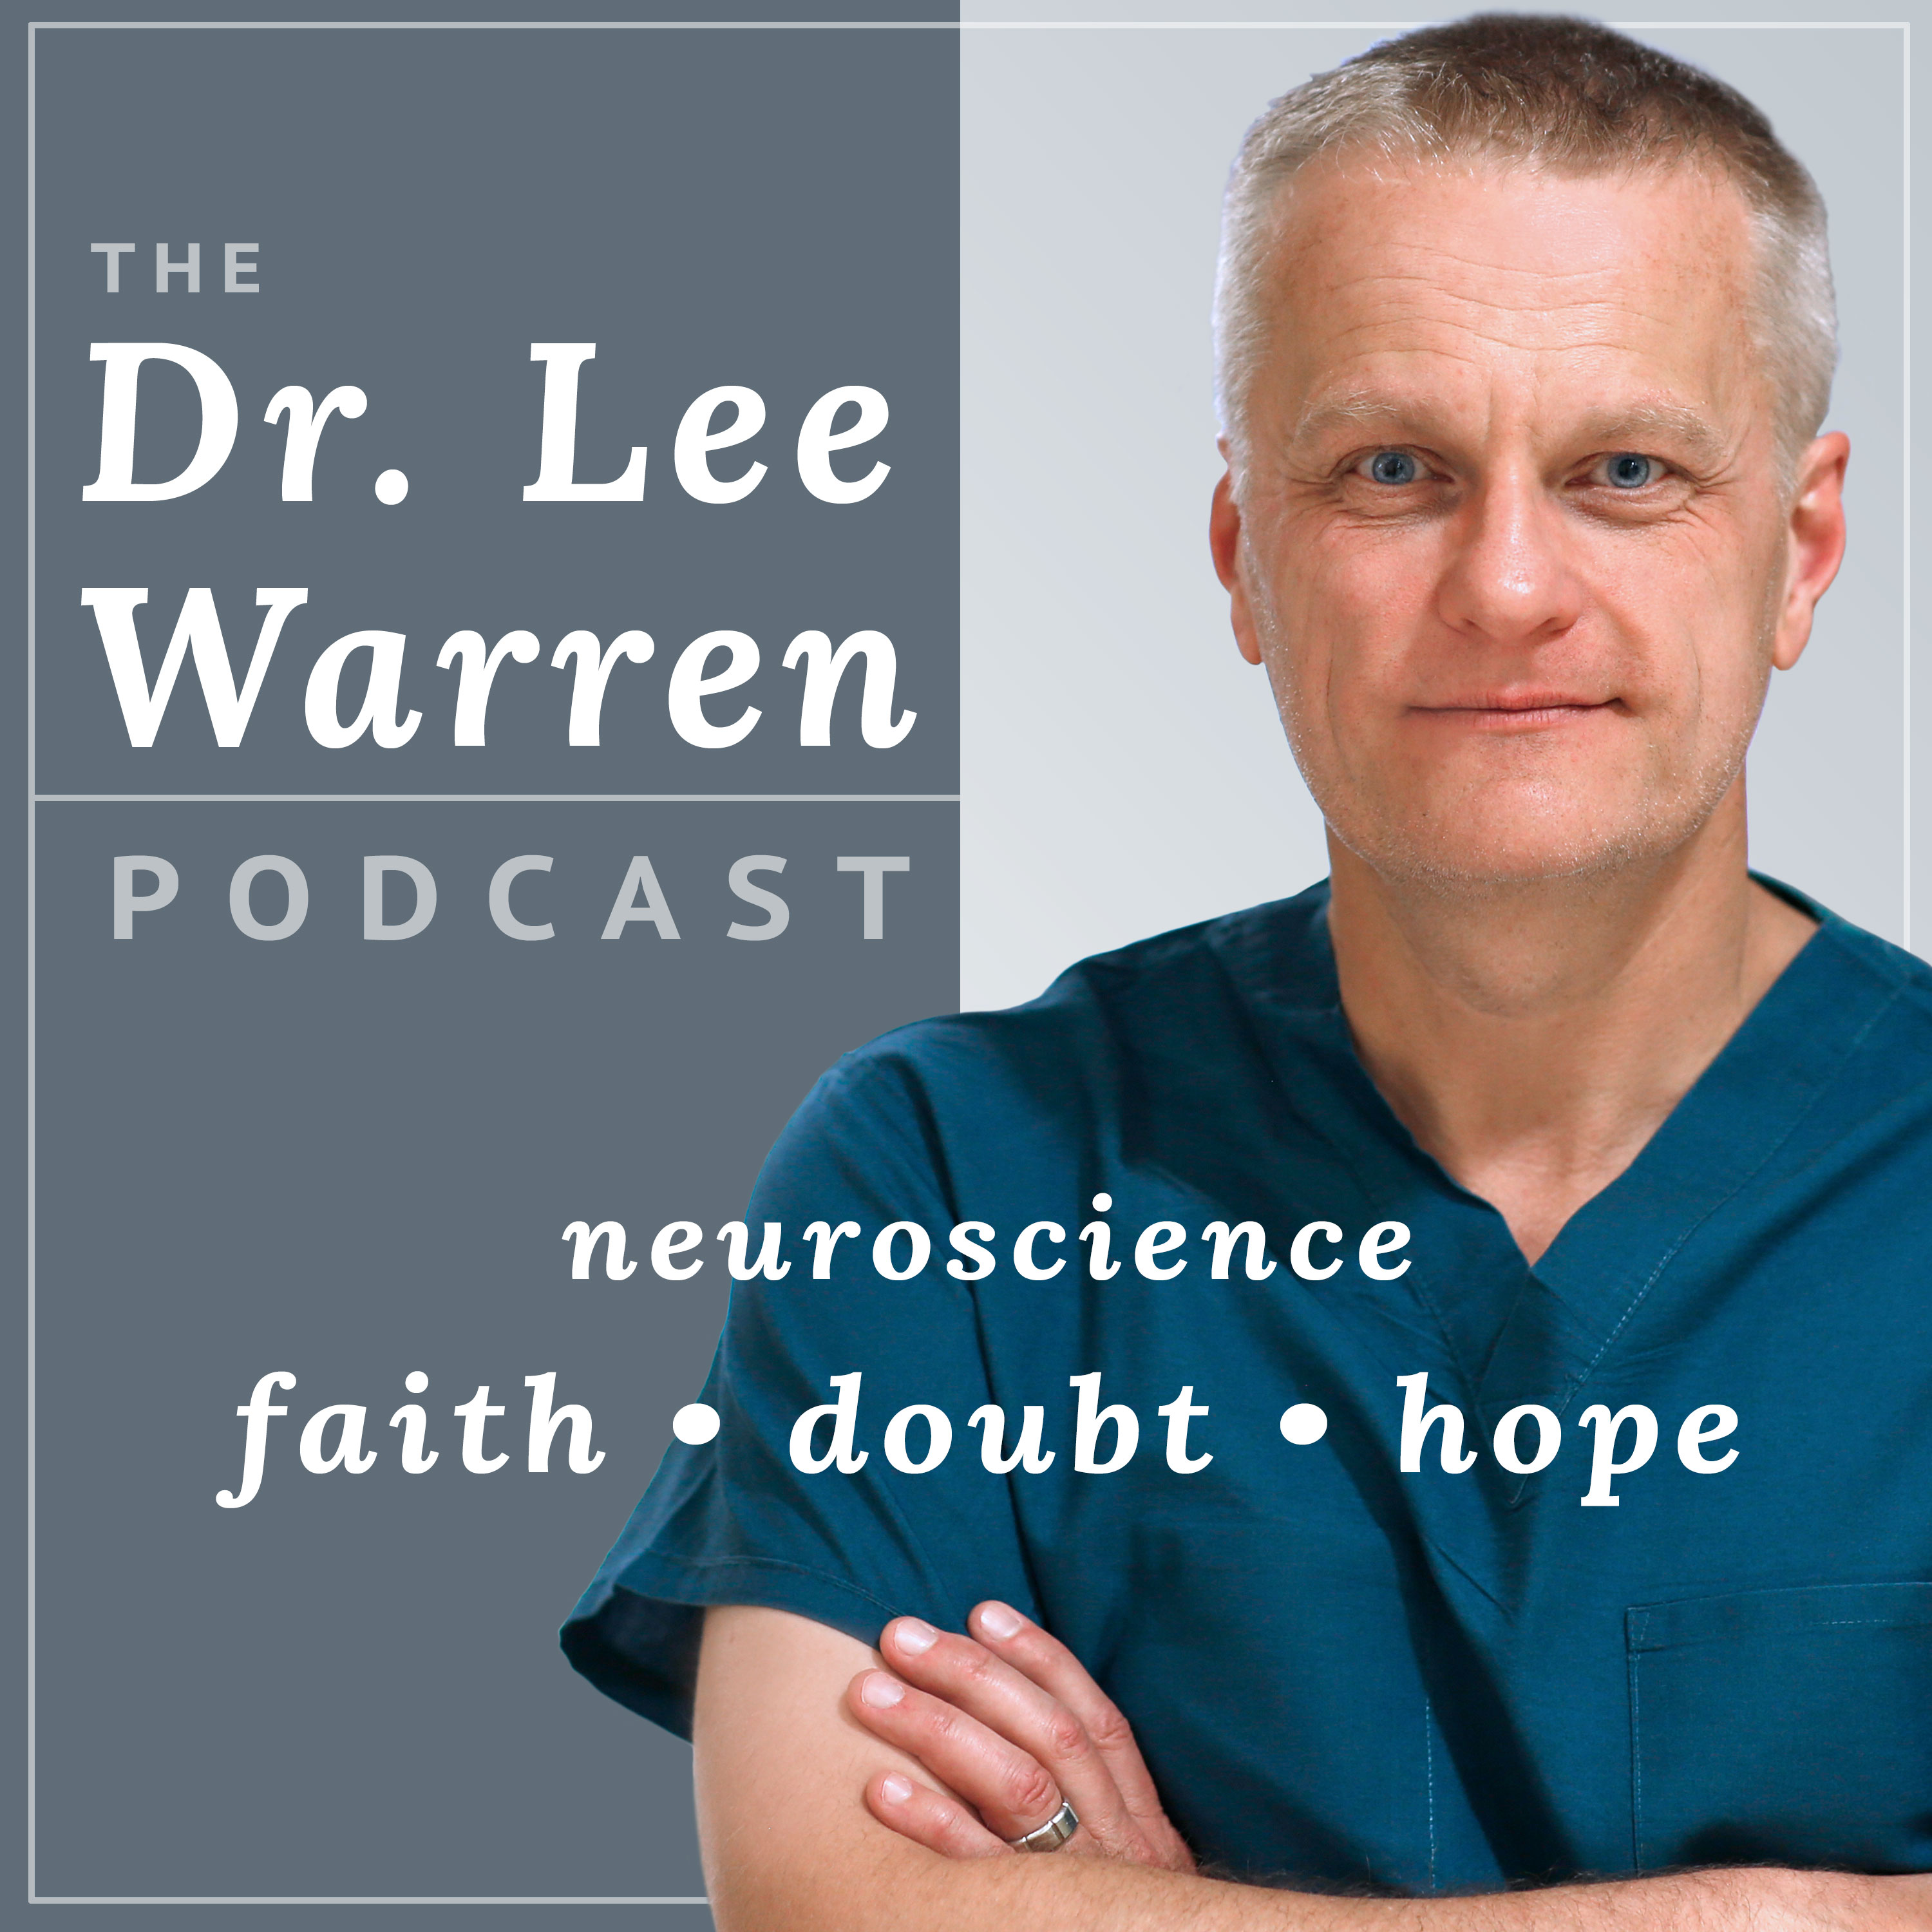 The Dr. Lee Warren Podcast